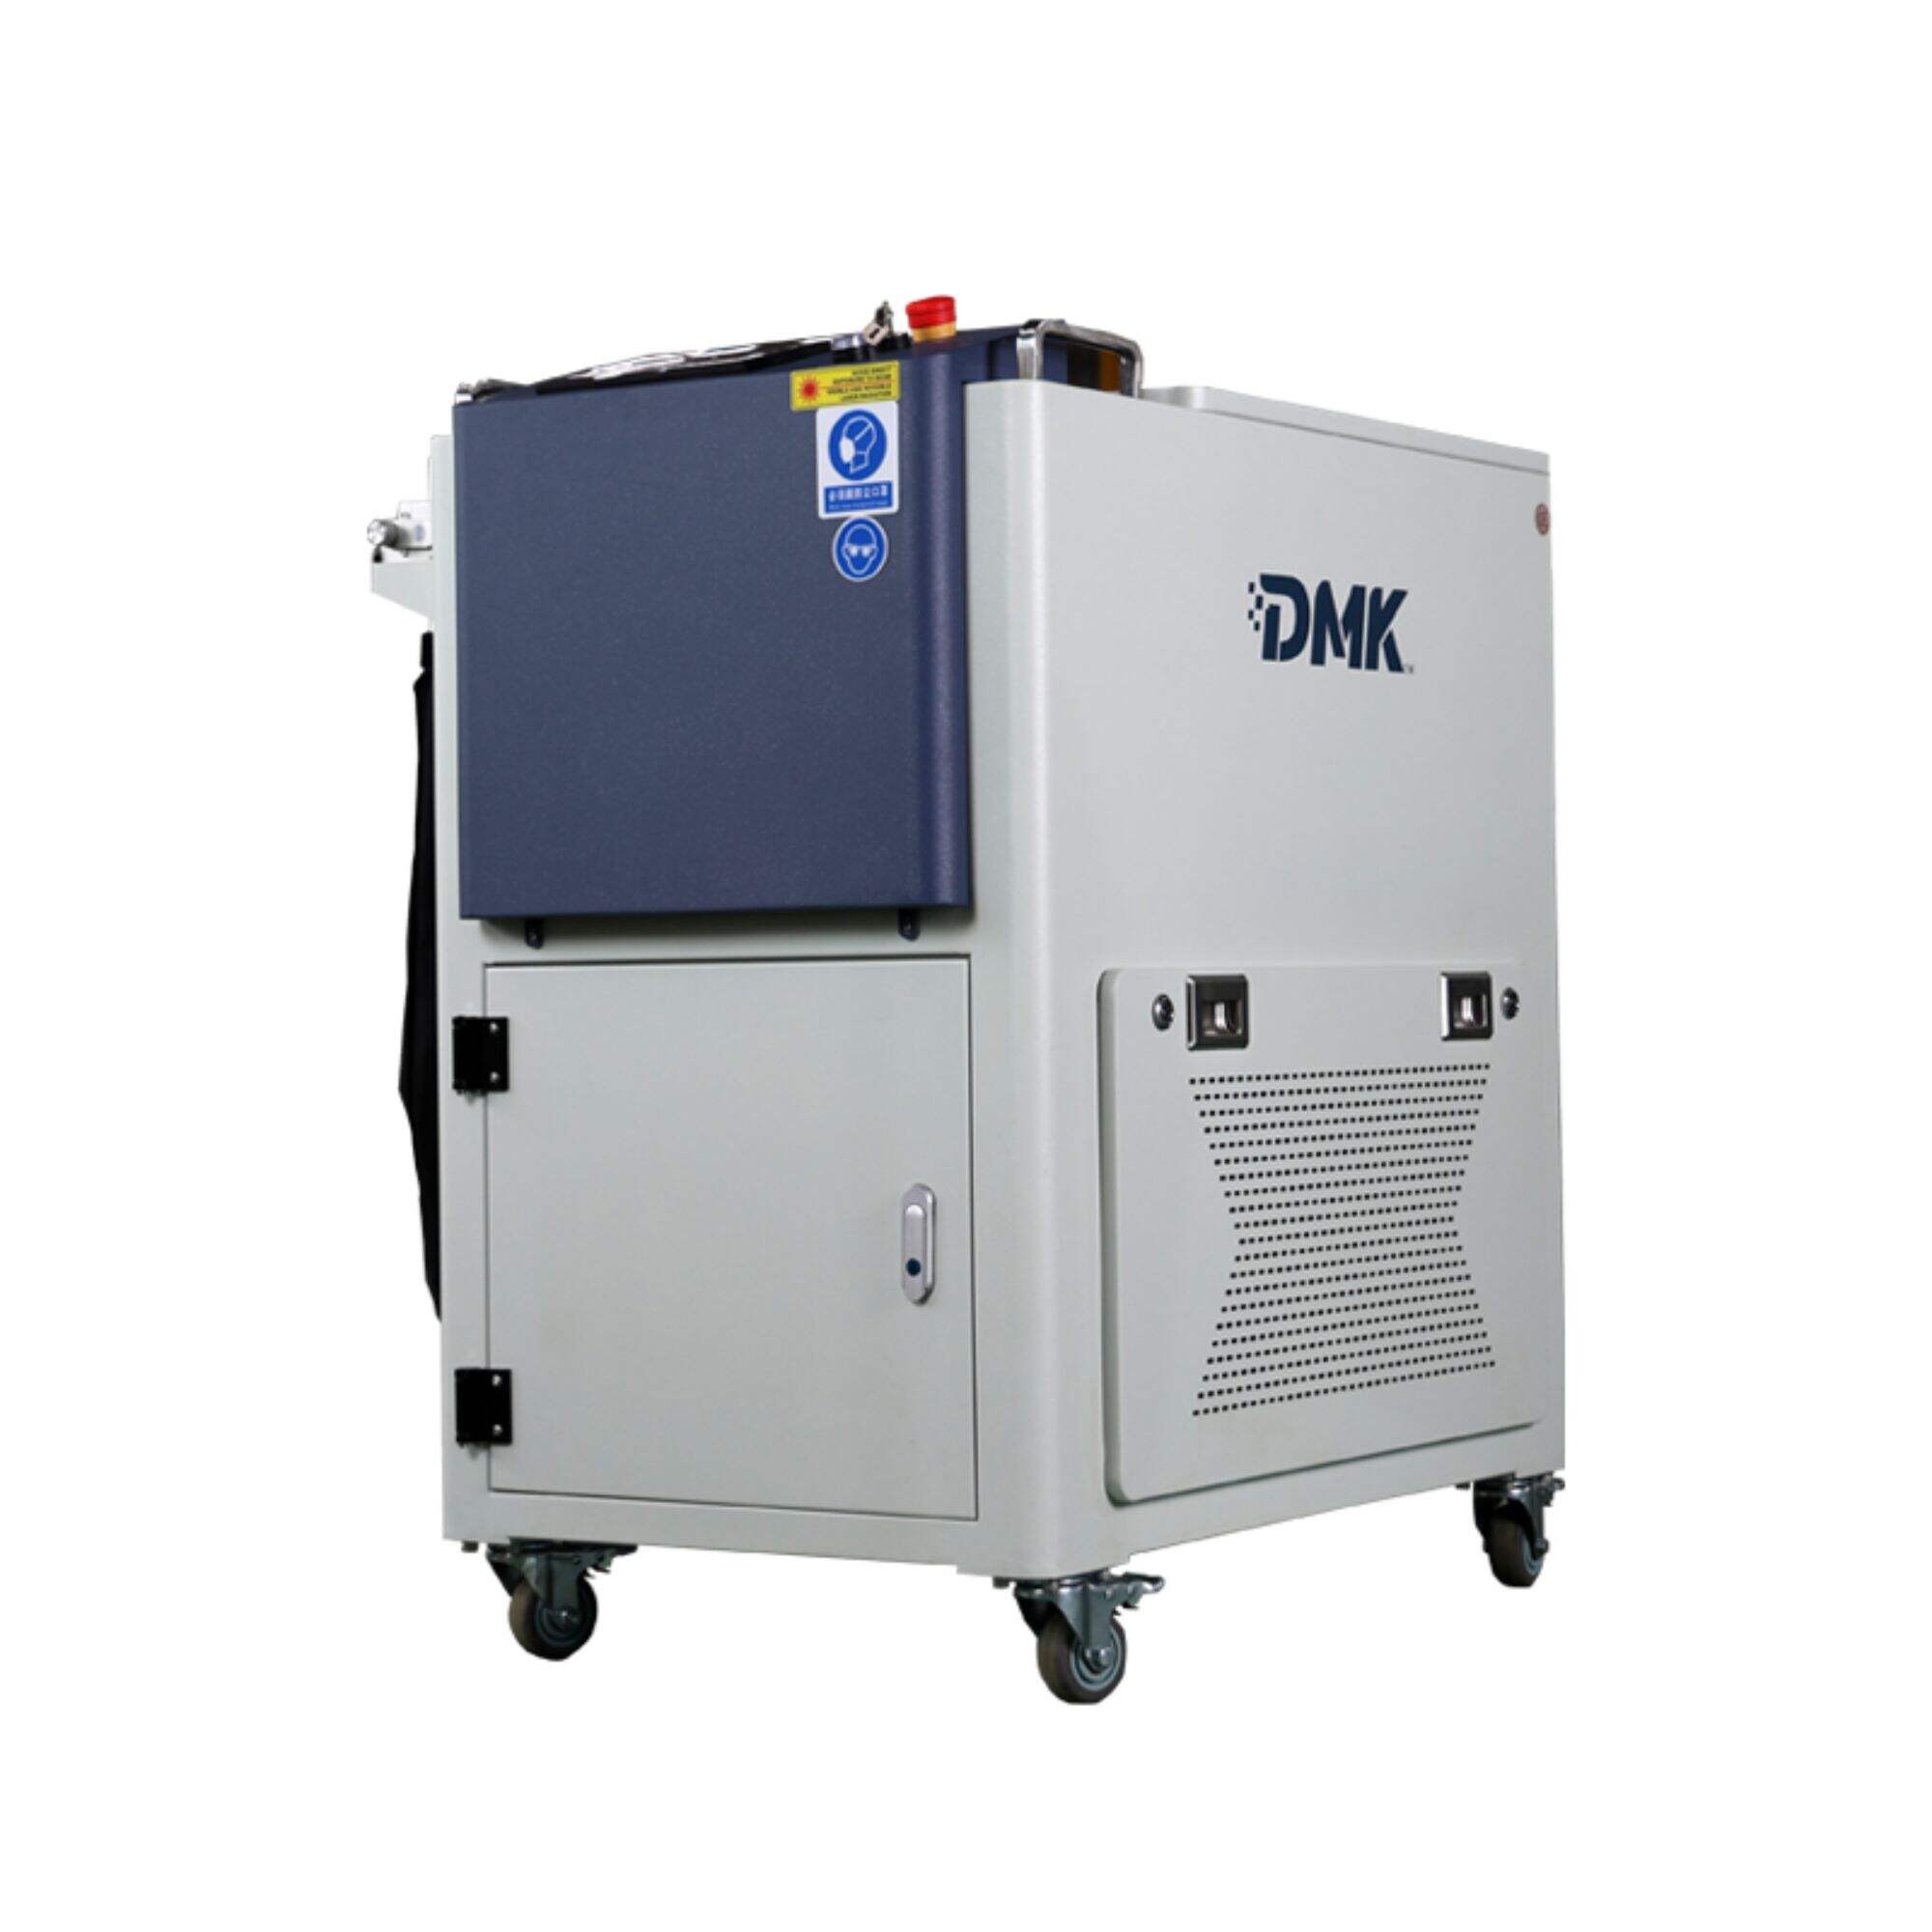 DMK Handheld 2000W CW laseretsreinigingsmachine